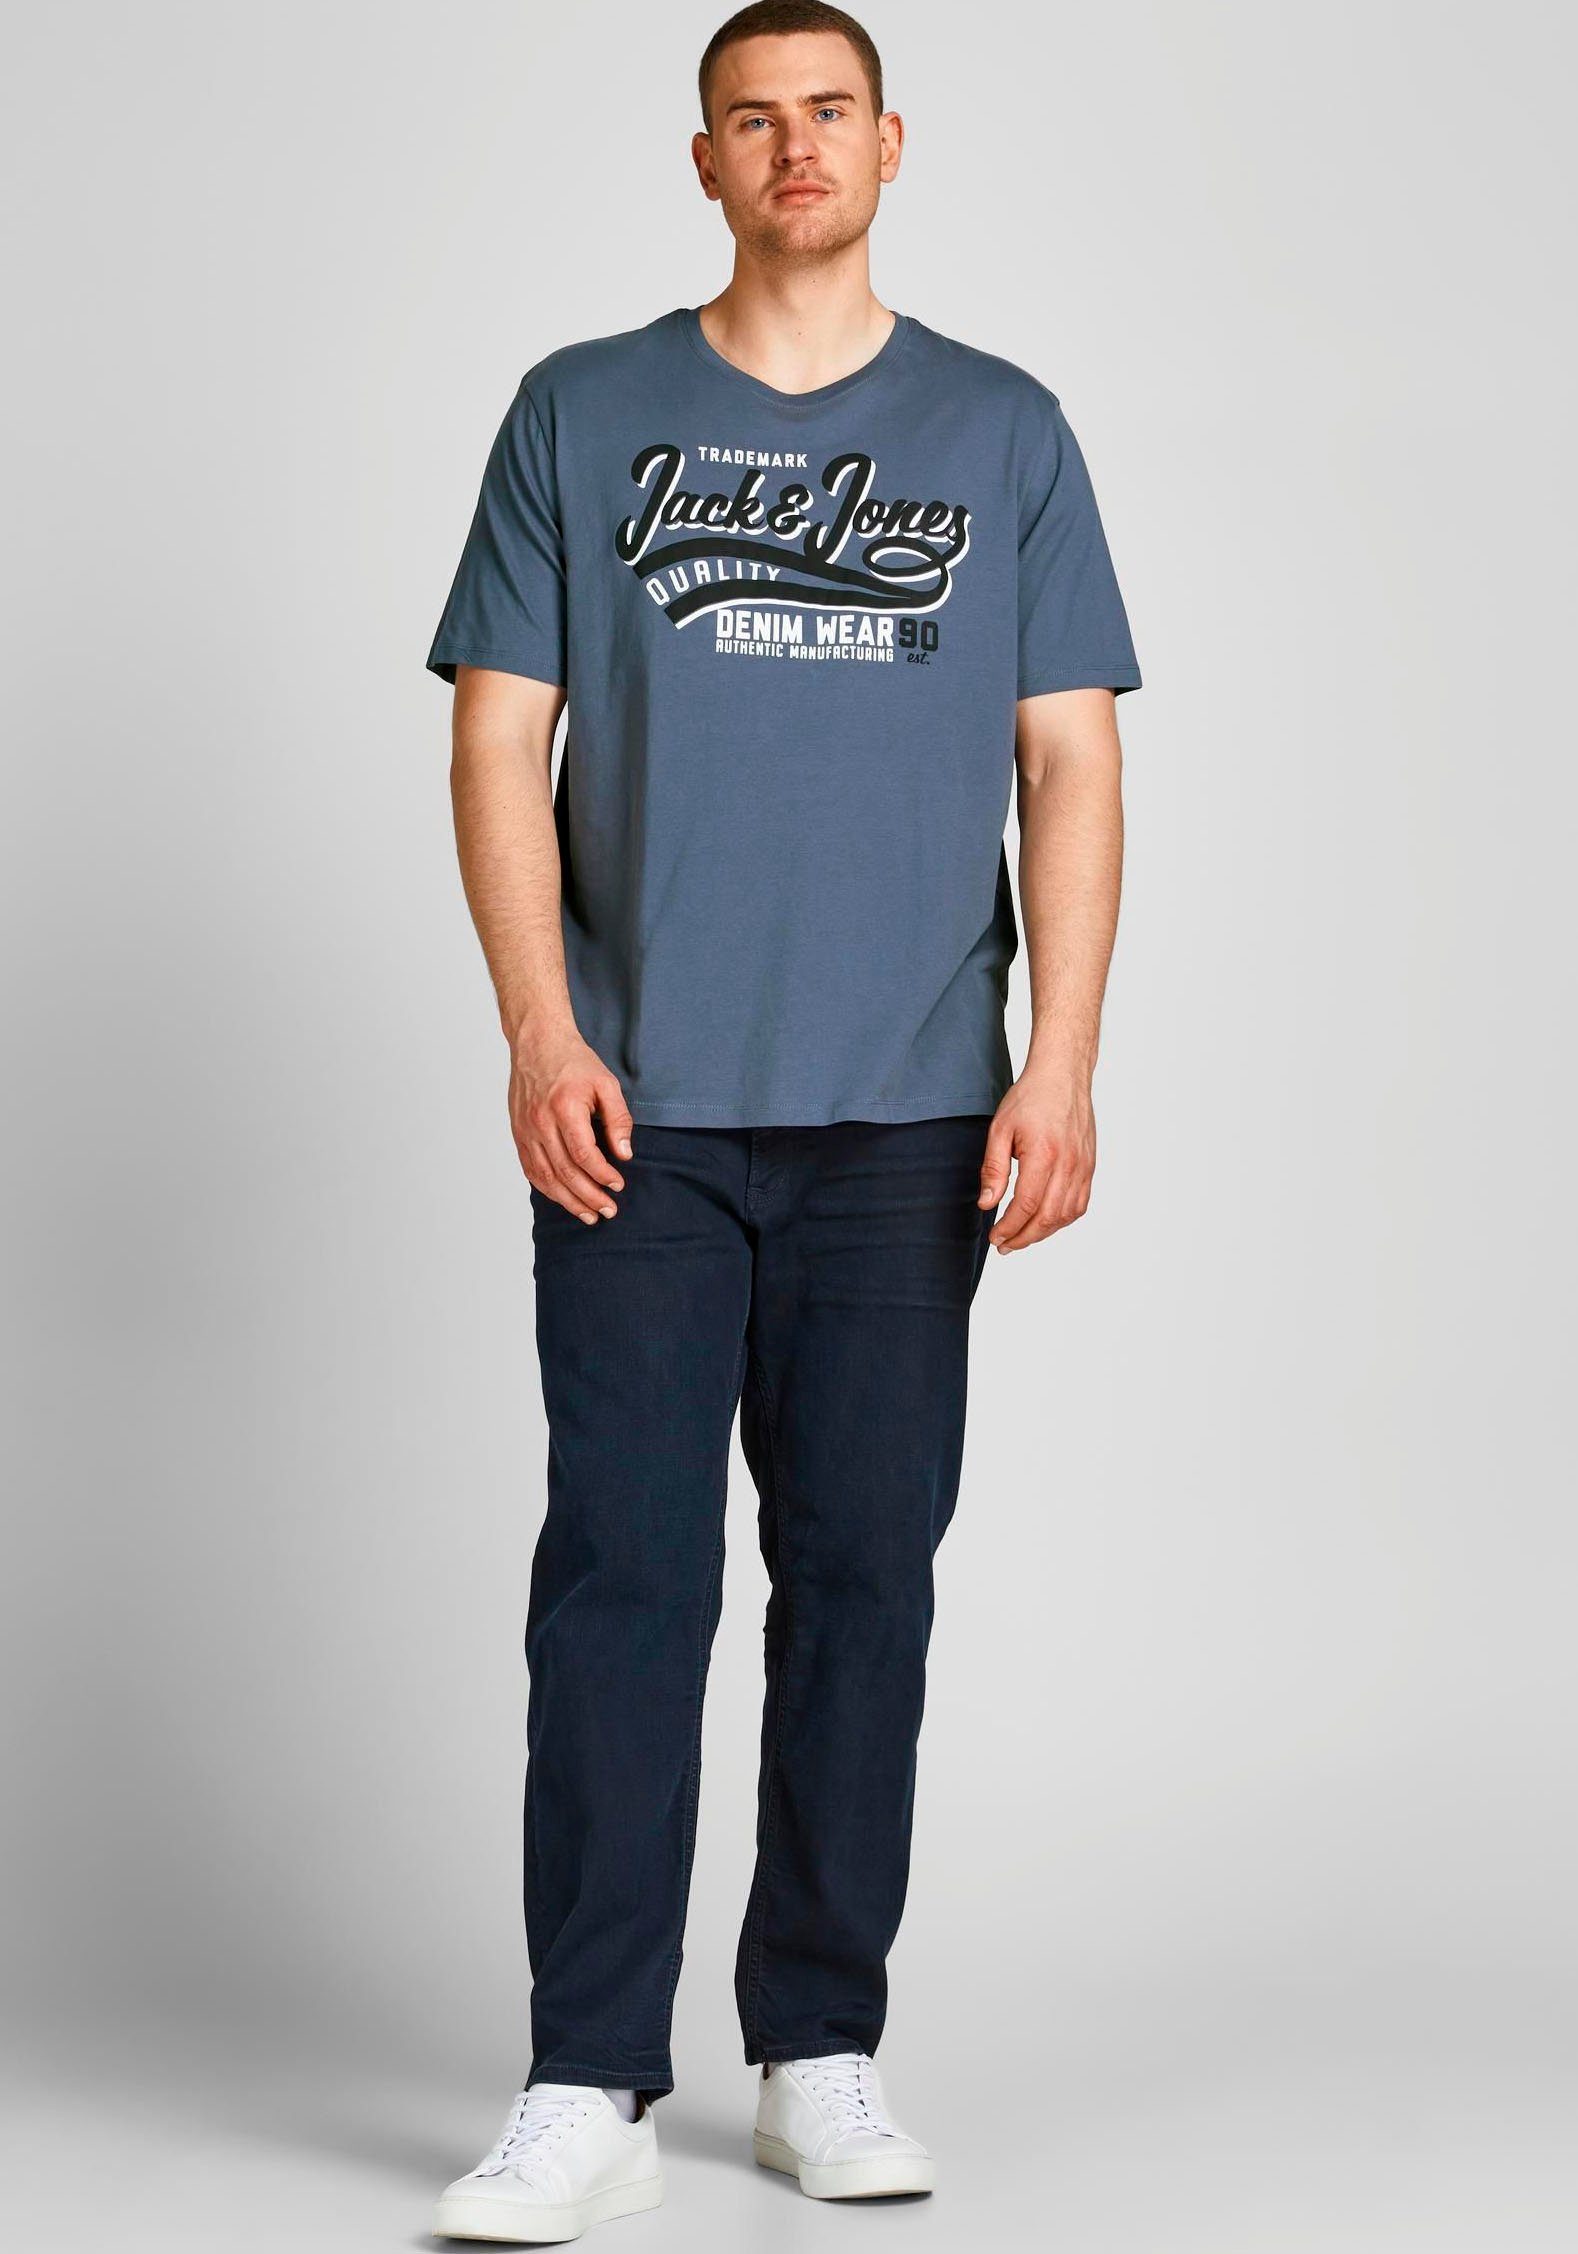 T-Shirt Jack TEE & PlusSize 6XL Jones LOGO dunkelgrau-blau Bis Größe